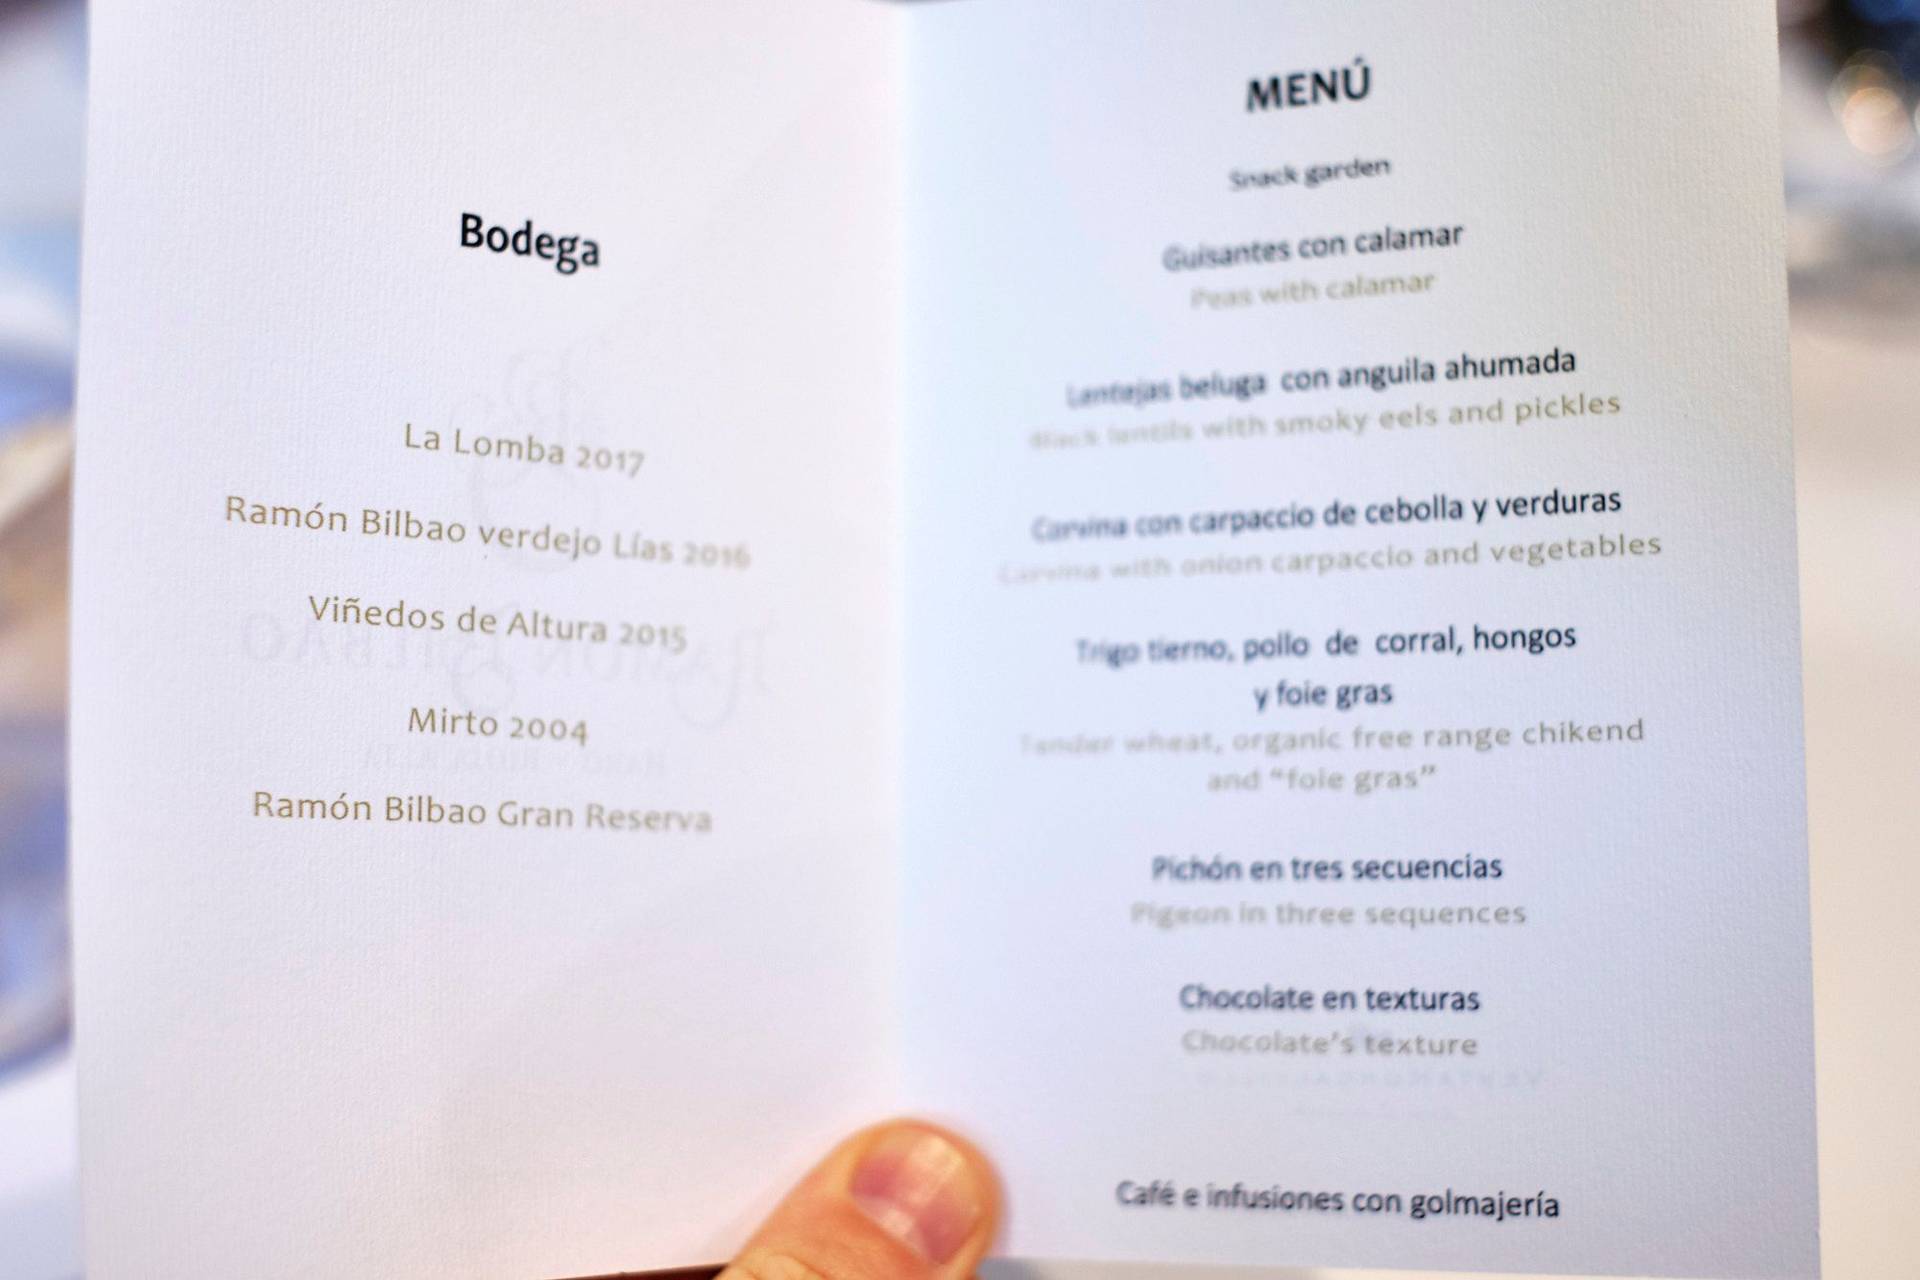 rioja wine menu at restaurant moncalvillo in rioja alta